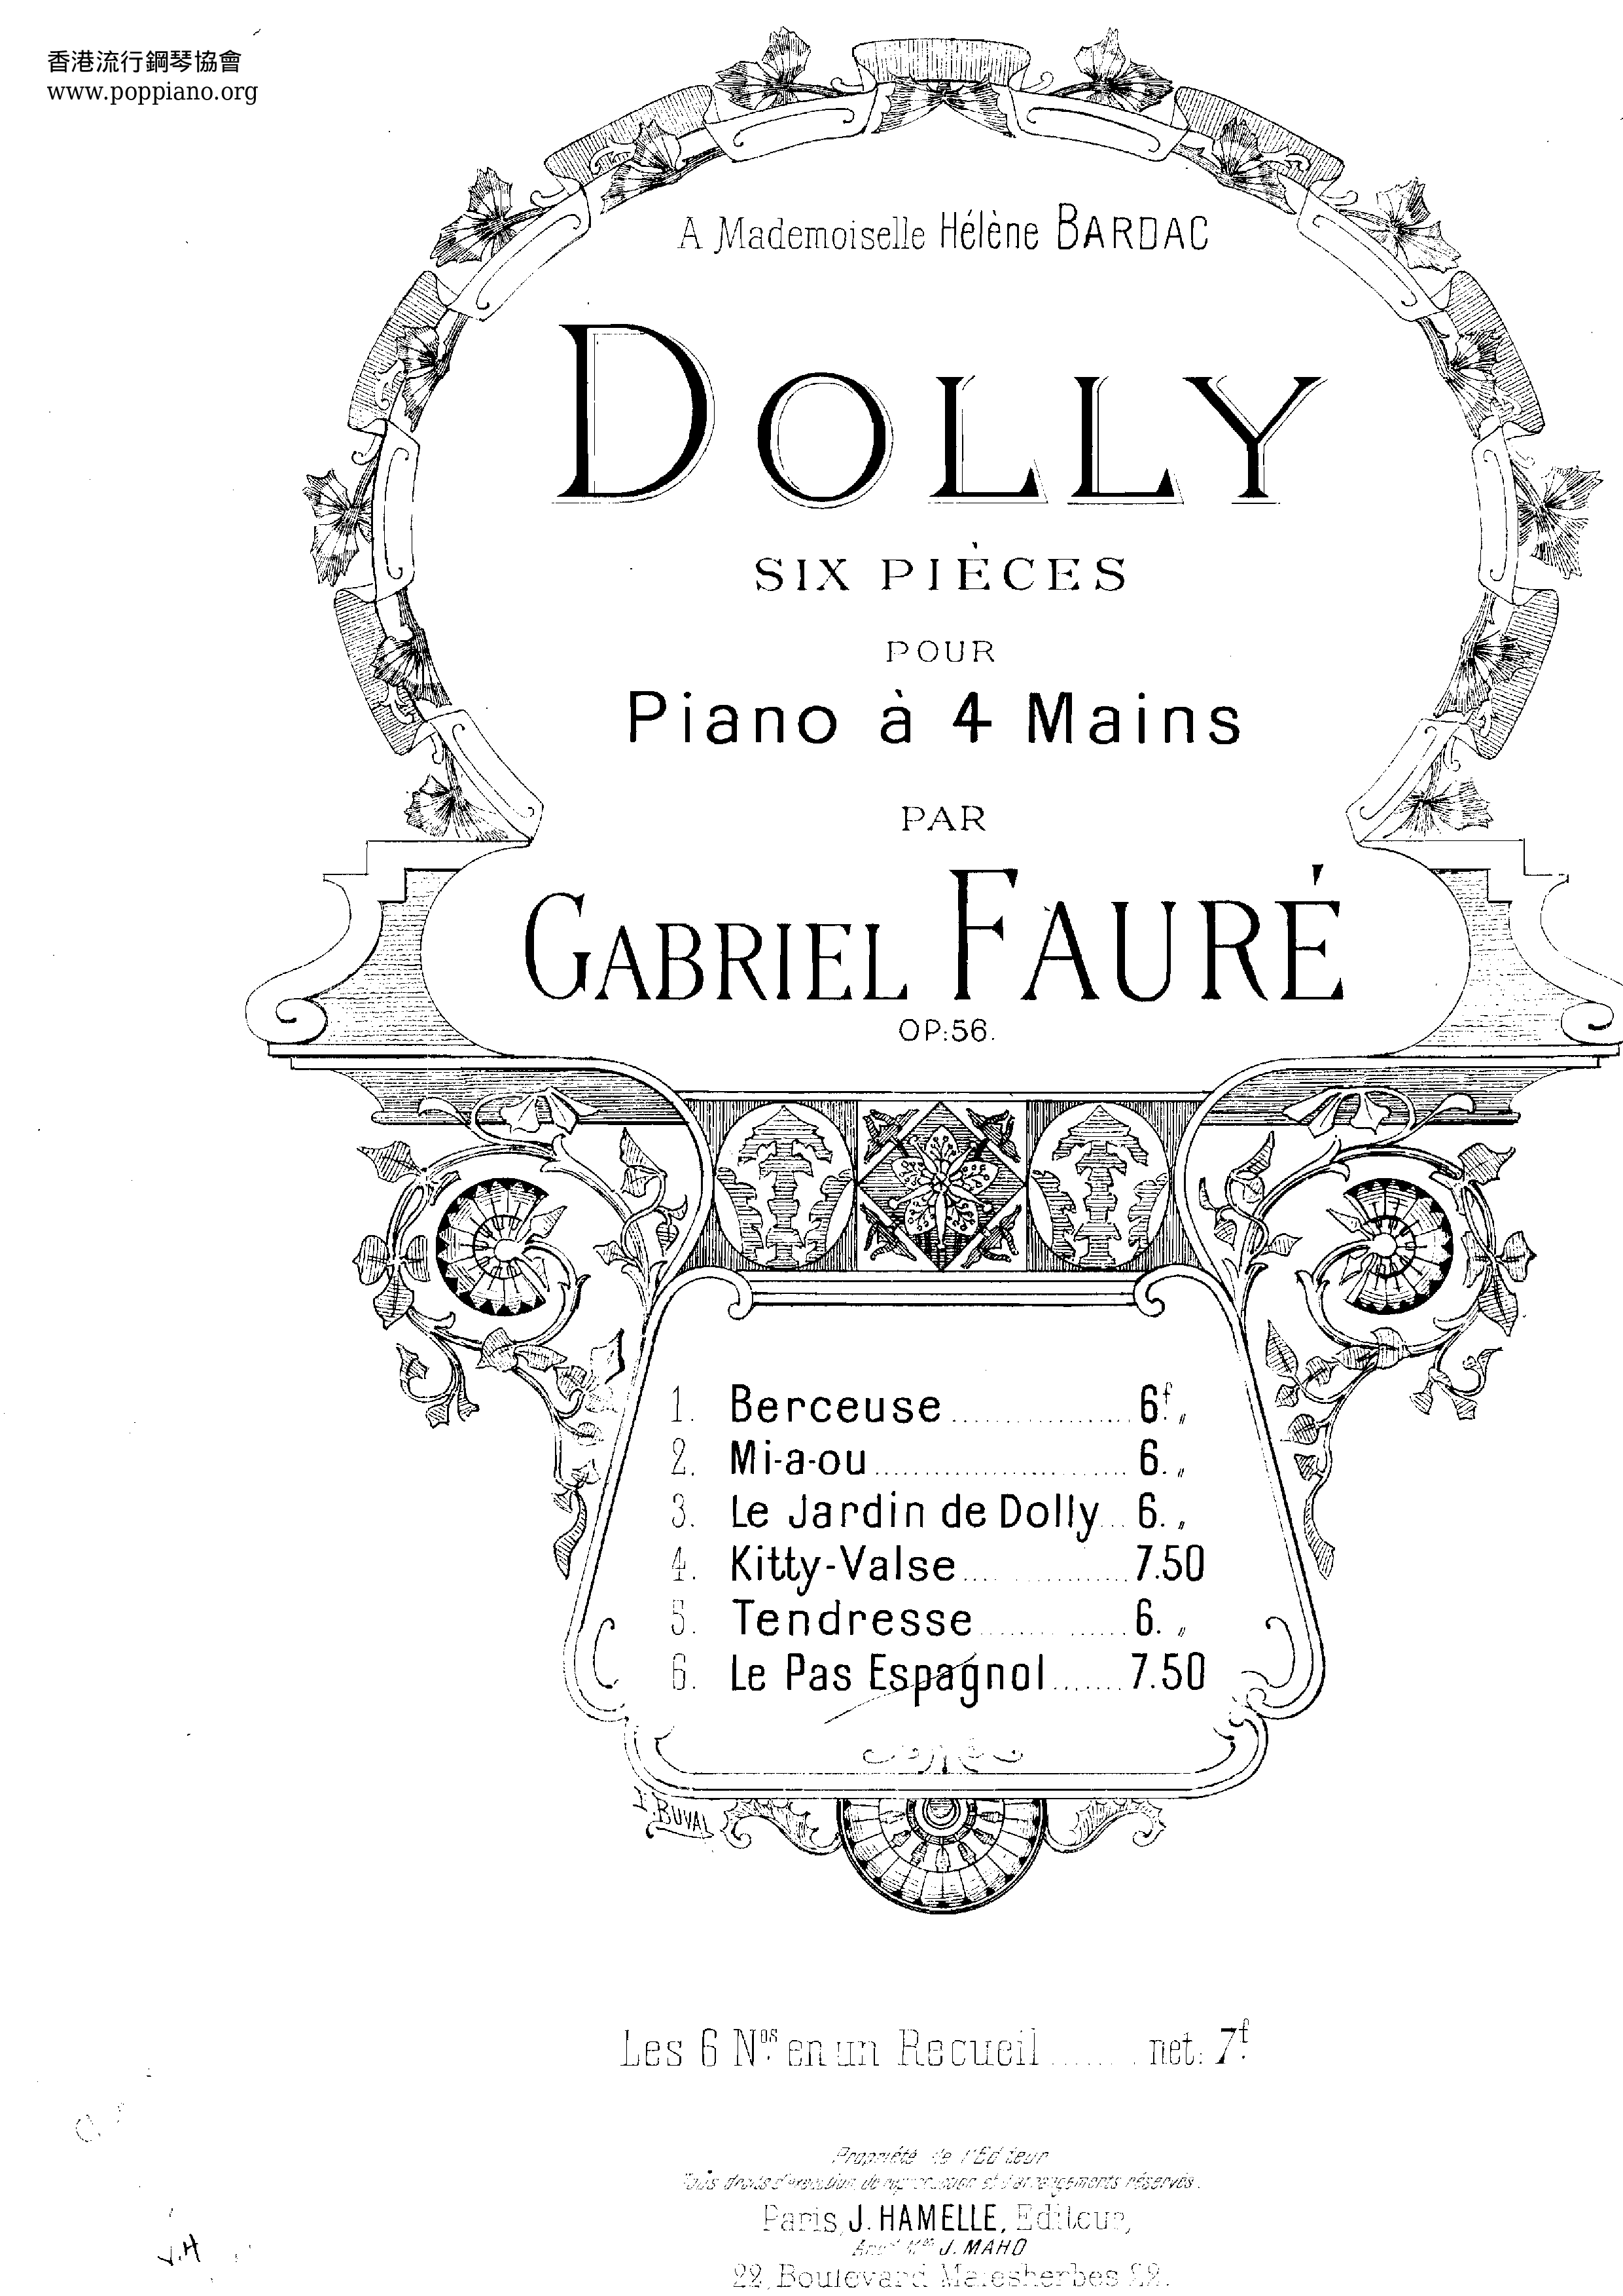 Dolly Suite Score